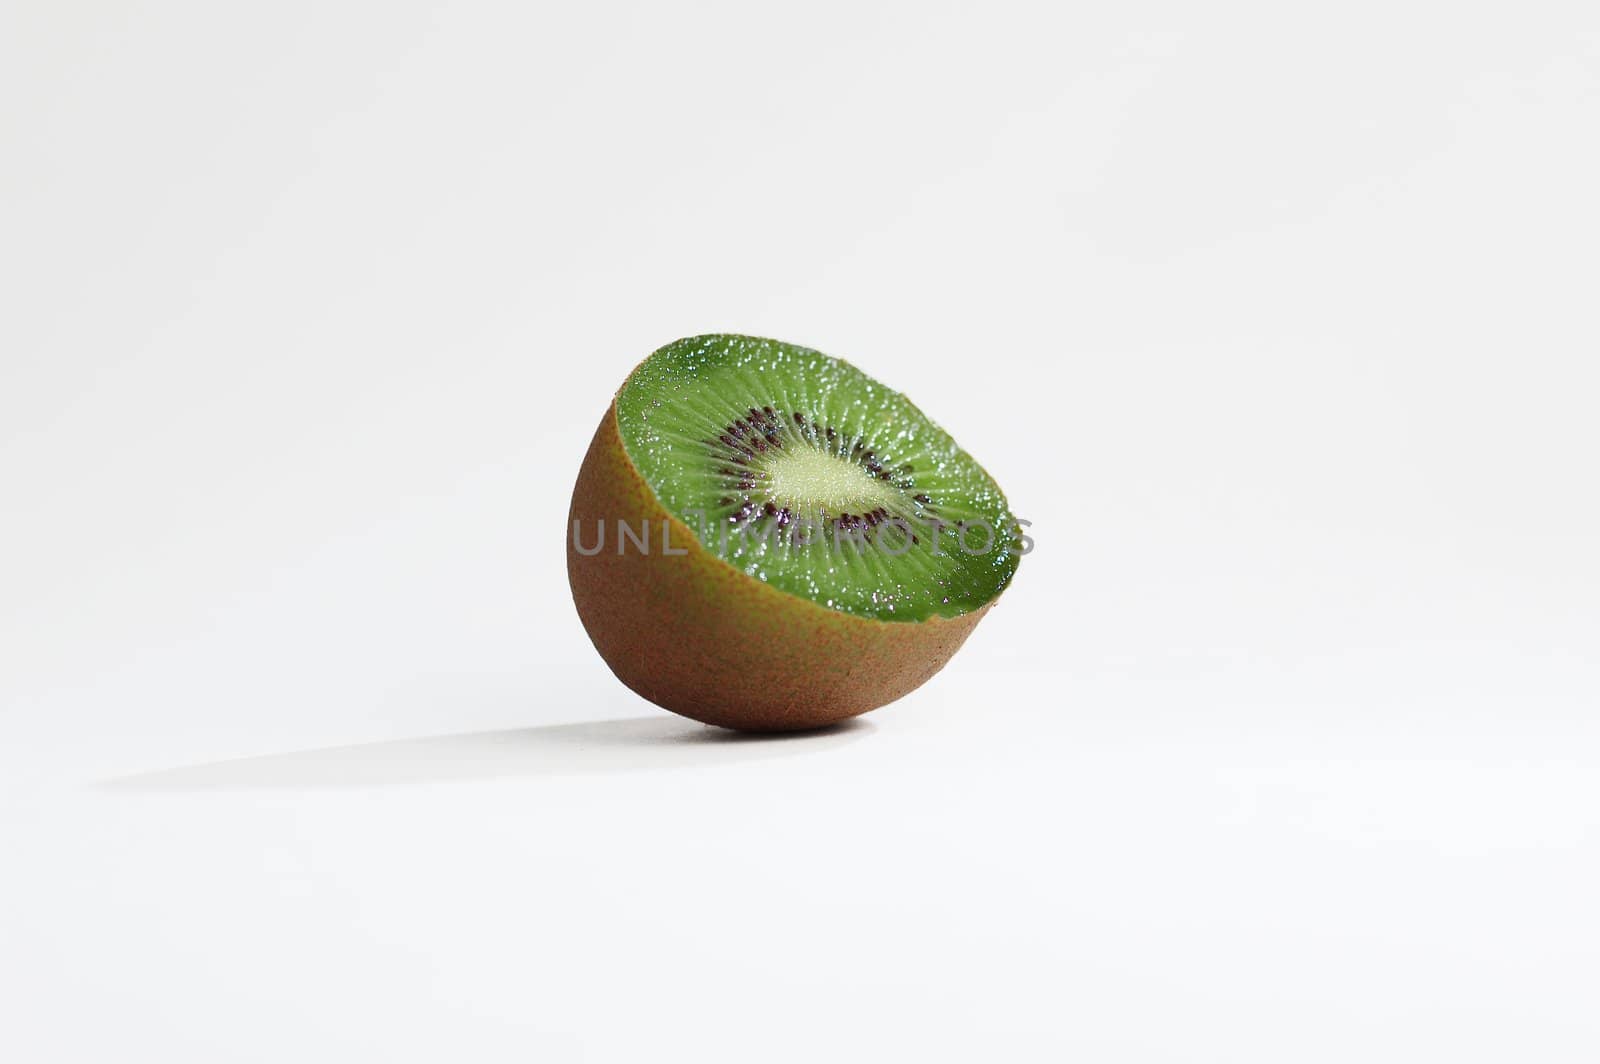 Hunk of sliced kiwi against white background.